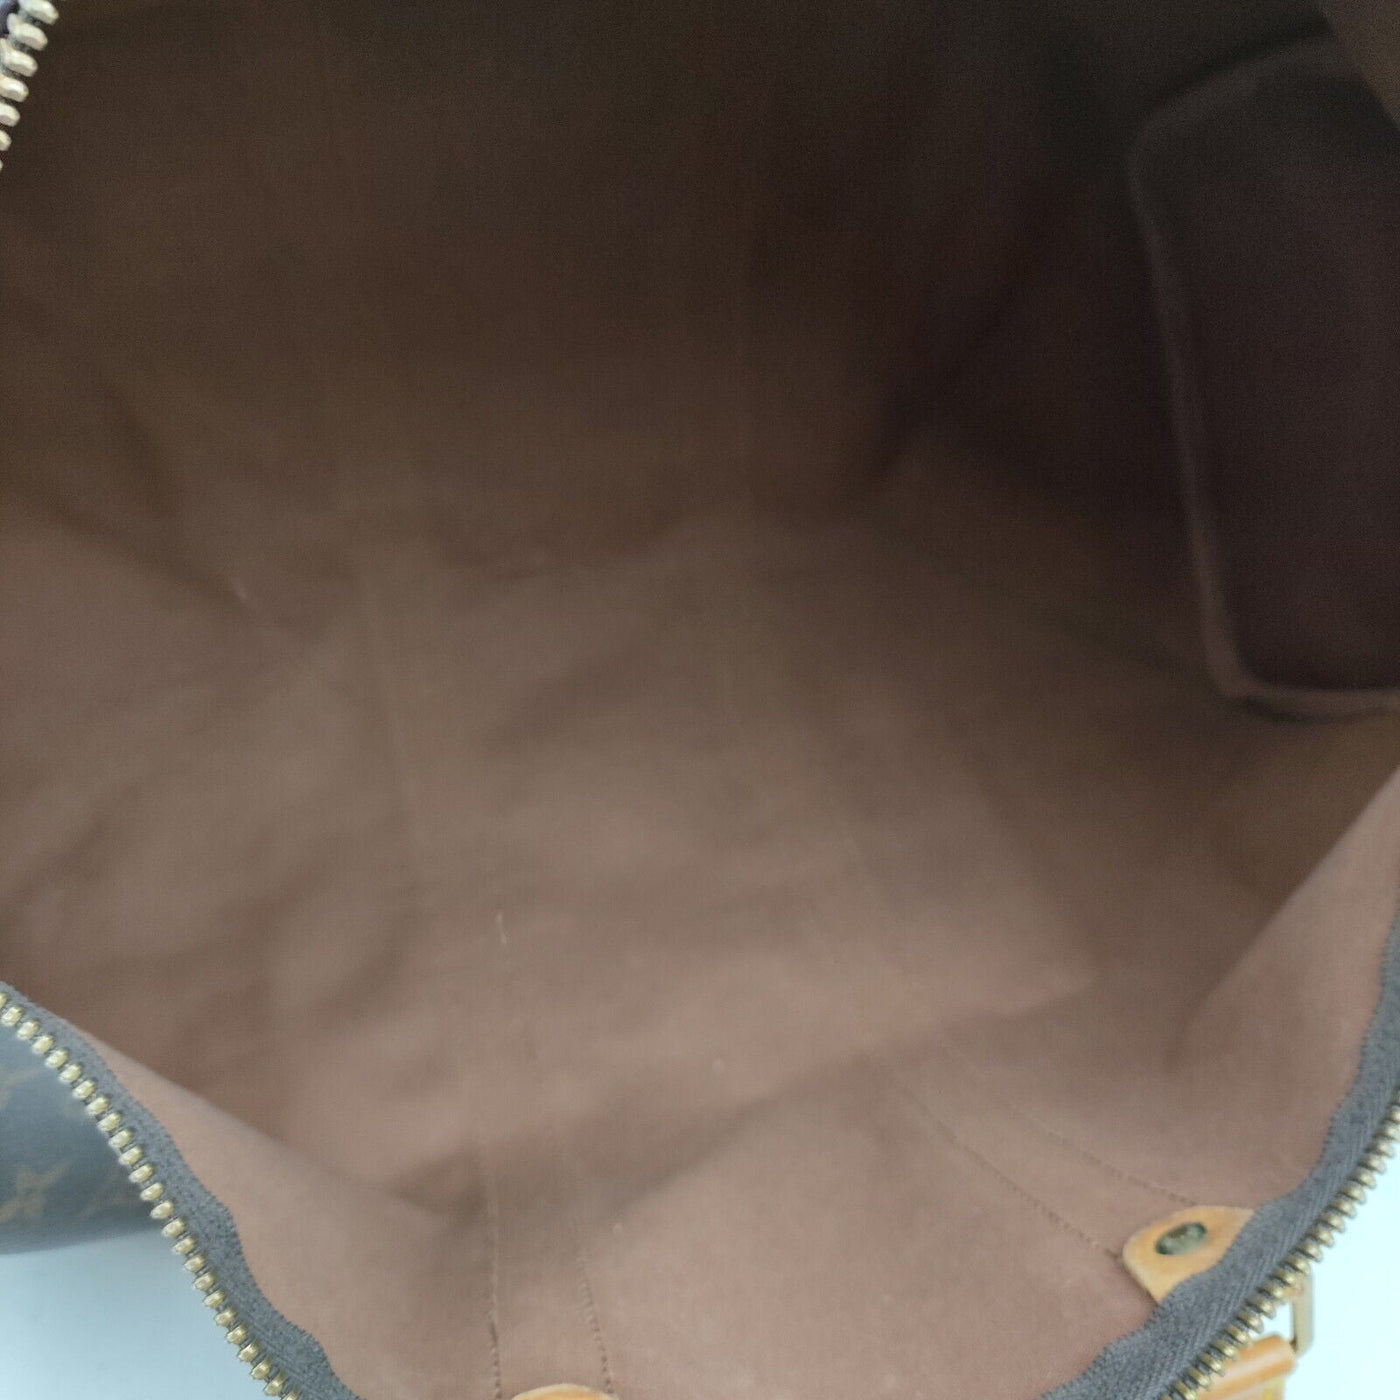 Louis Vuitton Boston Keepall Bandouliere 45 Travel Bag - Luxury Cheaper